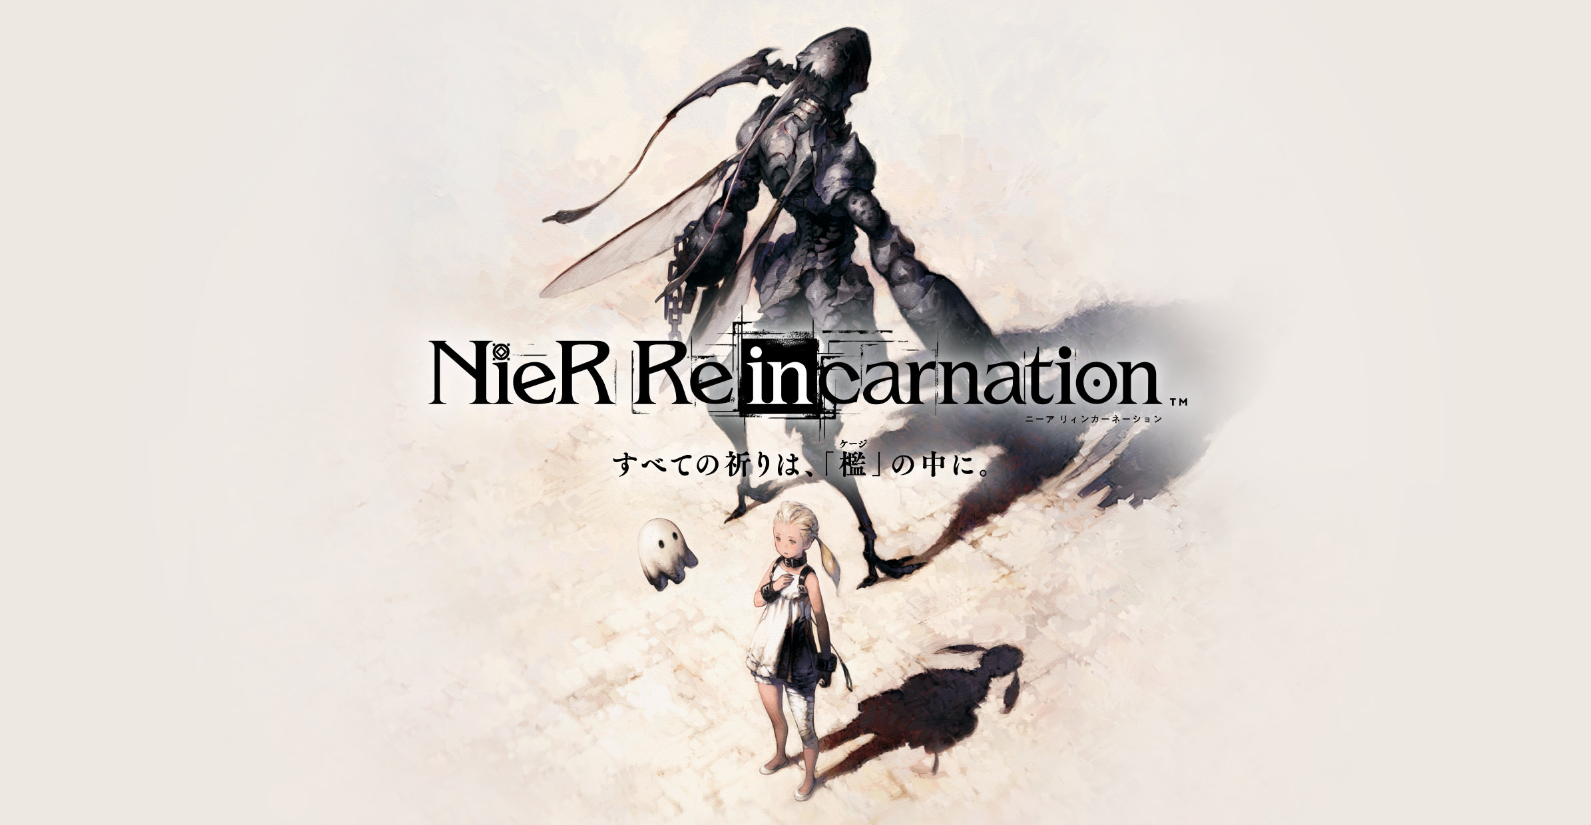 『NieR Re[in]carnation（ニーア リィンカーネーション）』完結を記念した資料集が8月28日に発売決定。キャラクタービジュアルやウェポンストーリーを始め、アプリ未実装のエピソードなどを収録